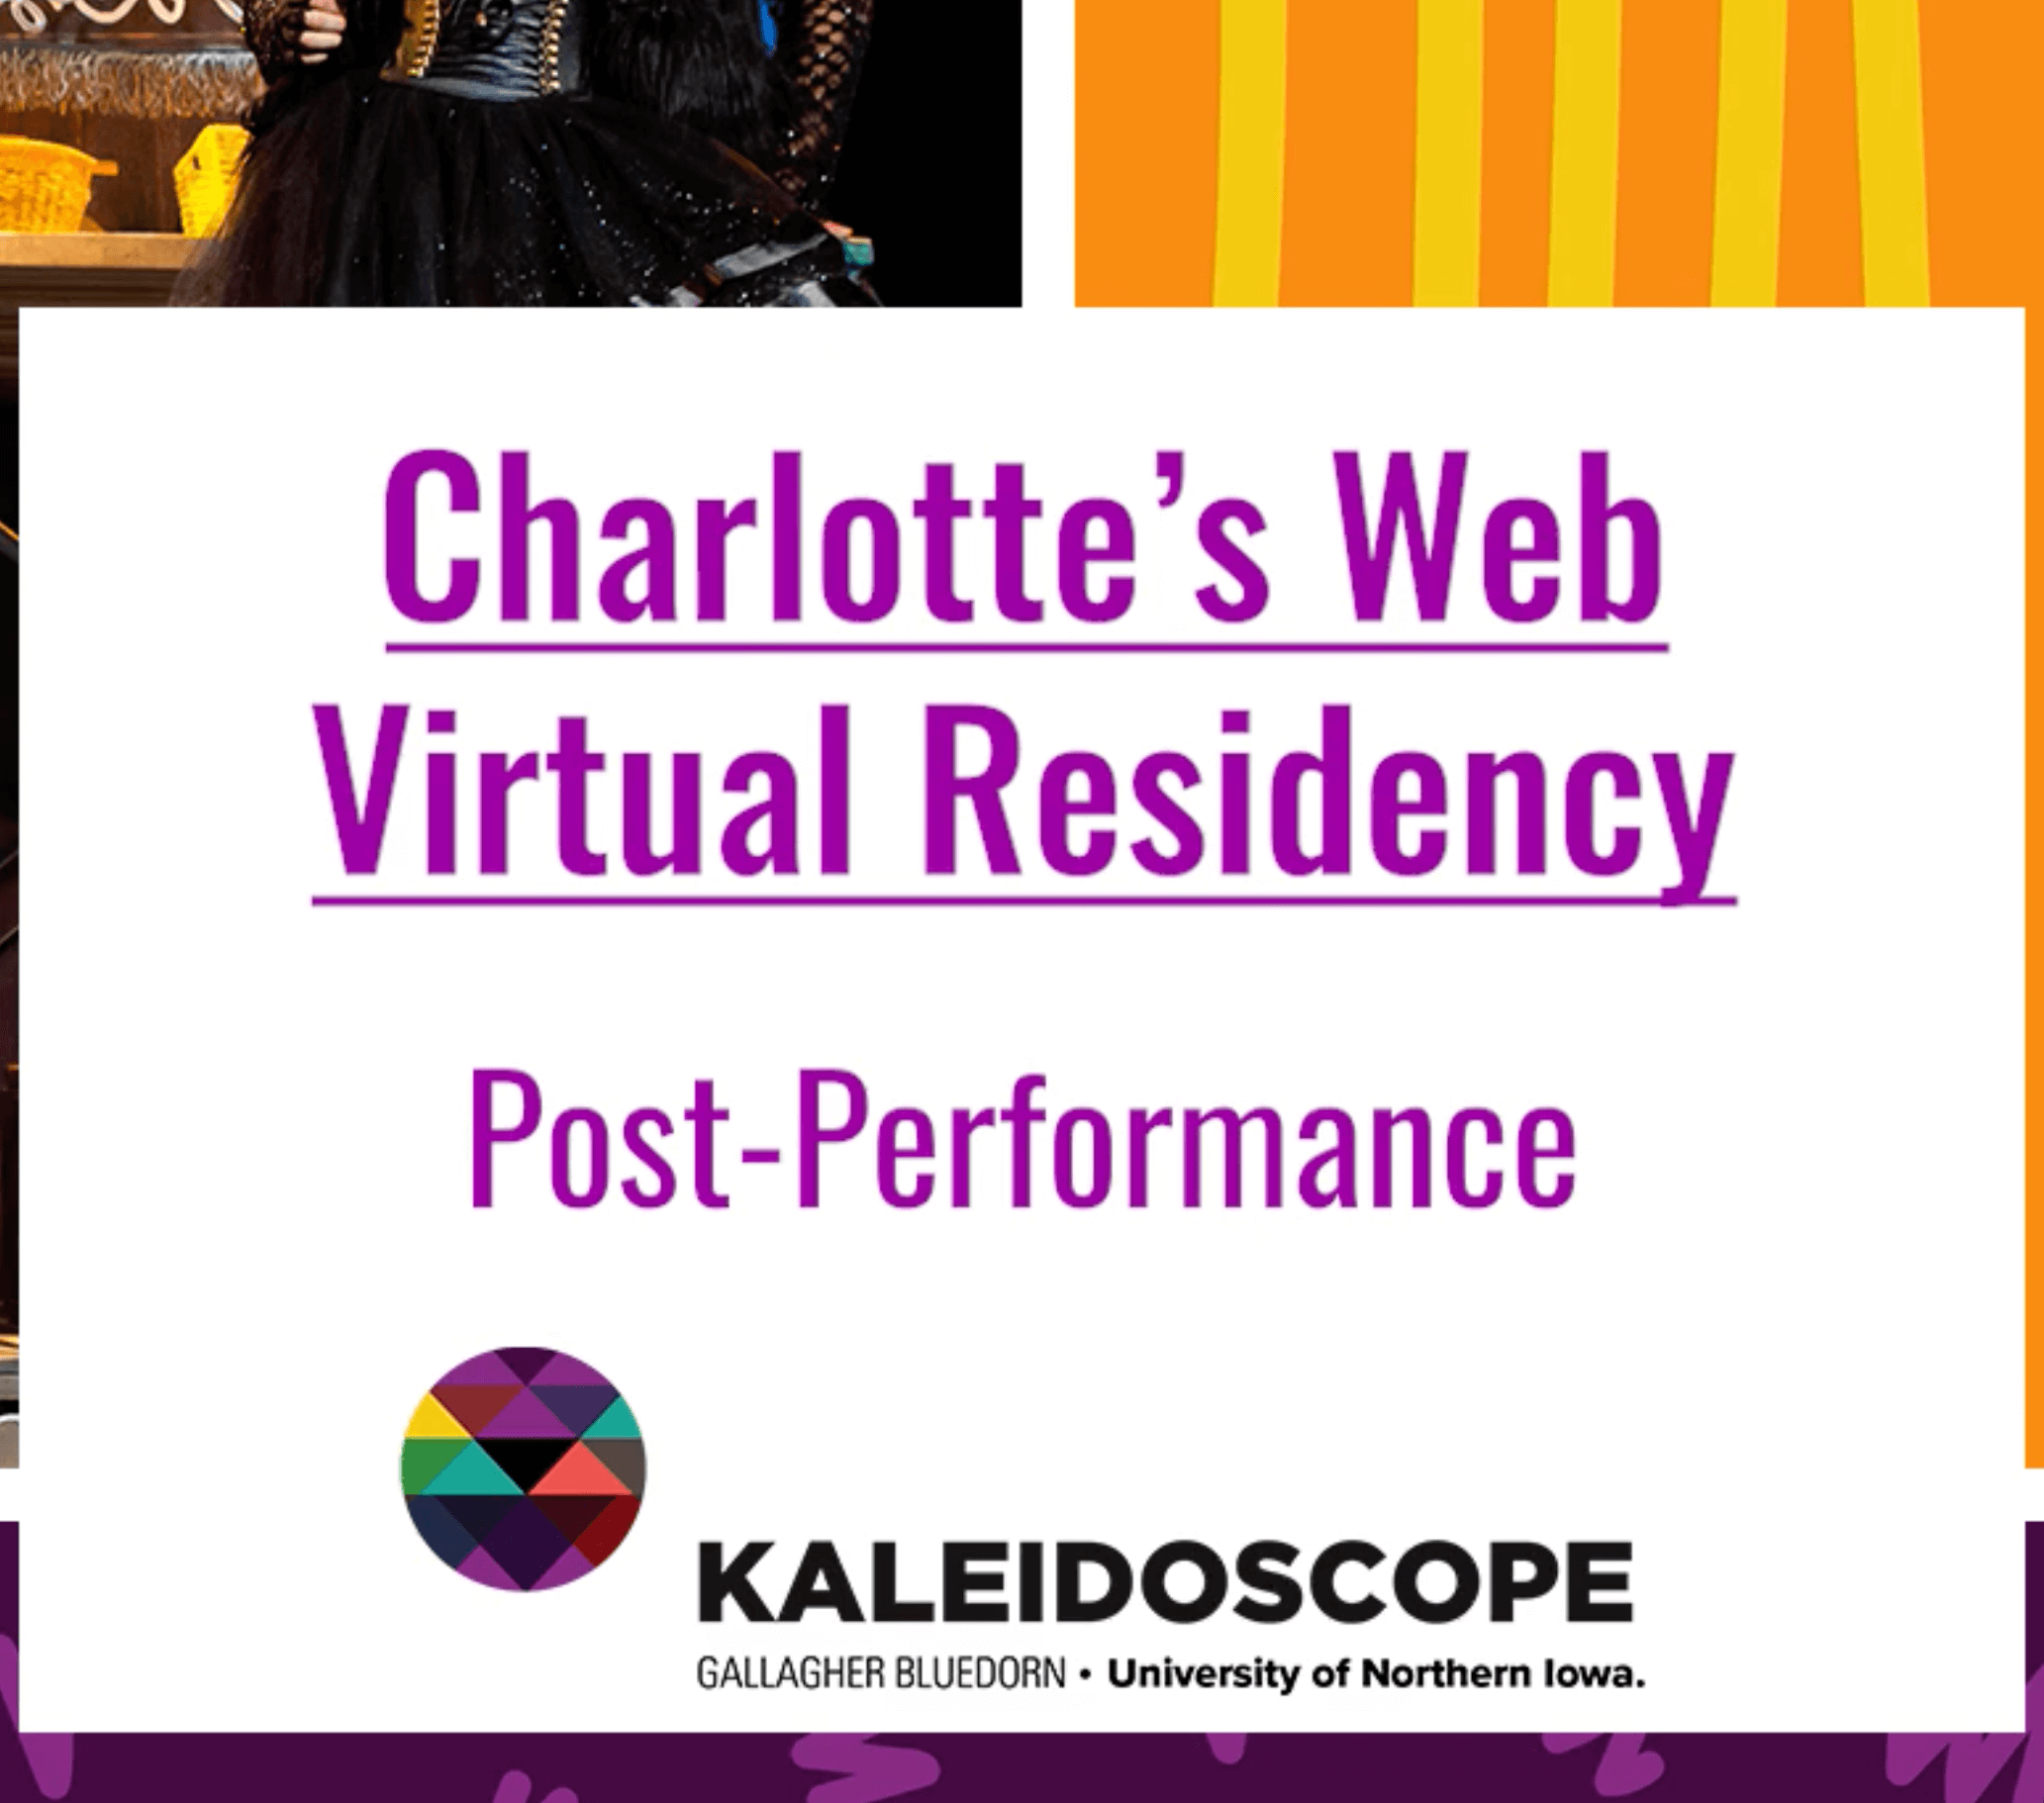 Charlotte's Web Virtual Residency